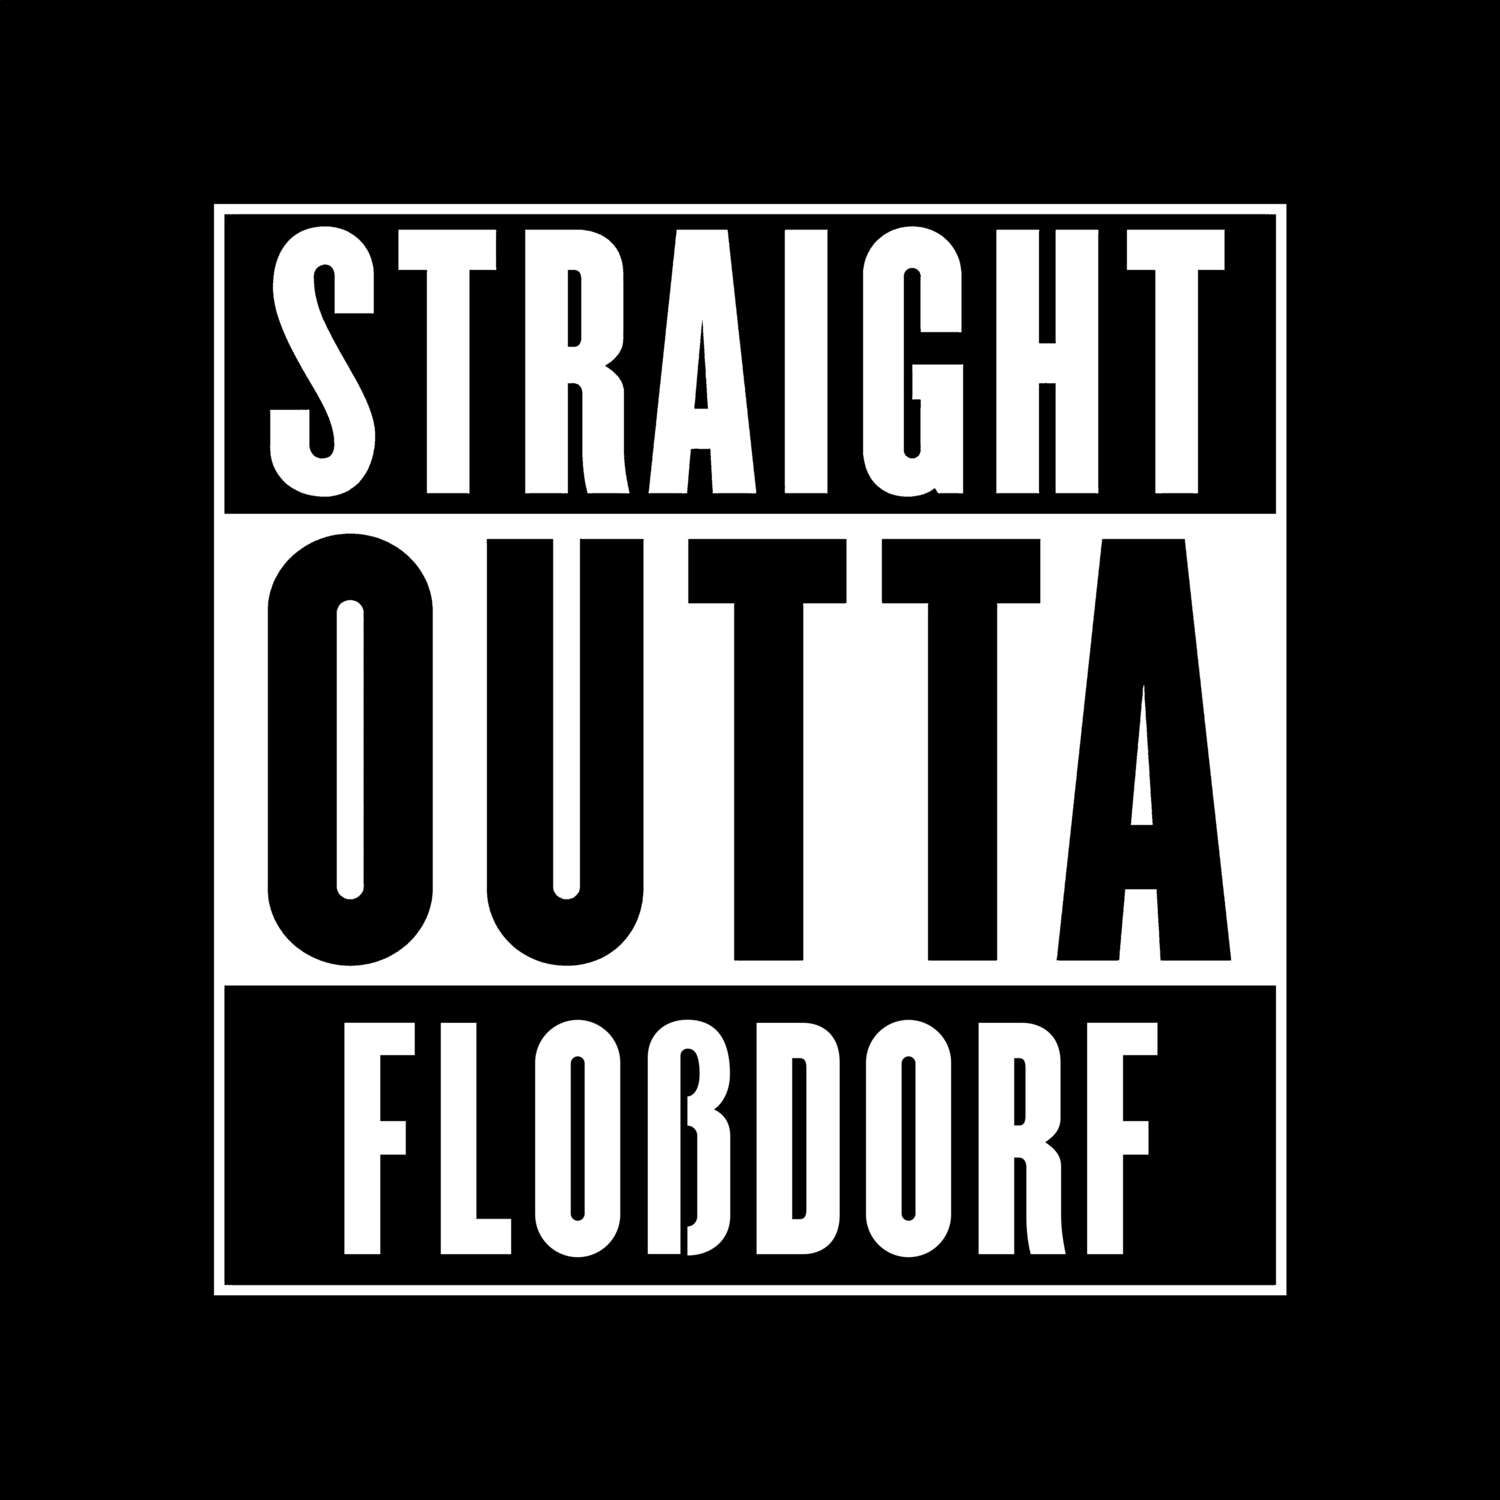 Floßdorf T-Shirt »Straight Outta«